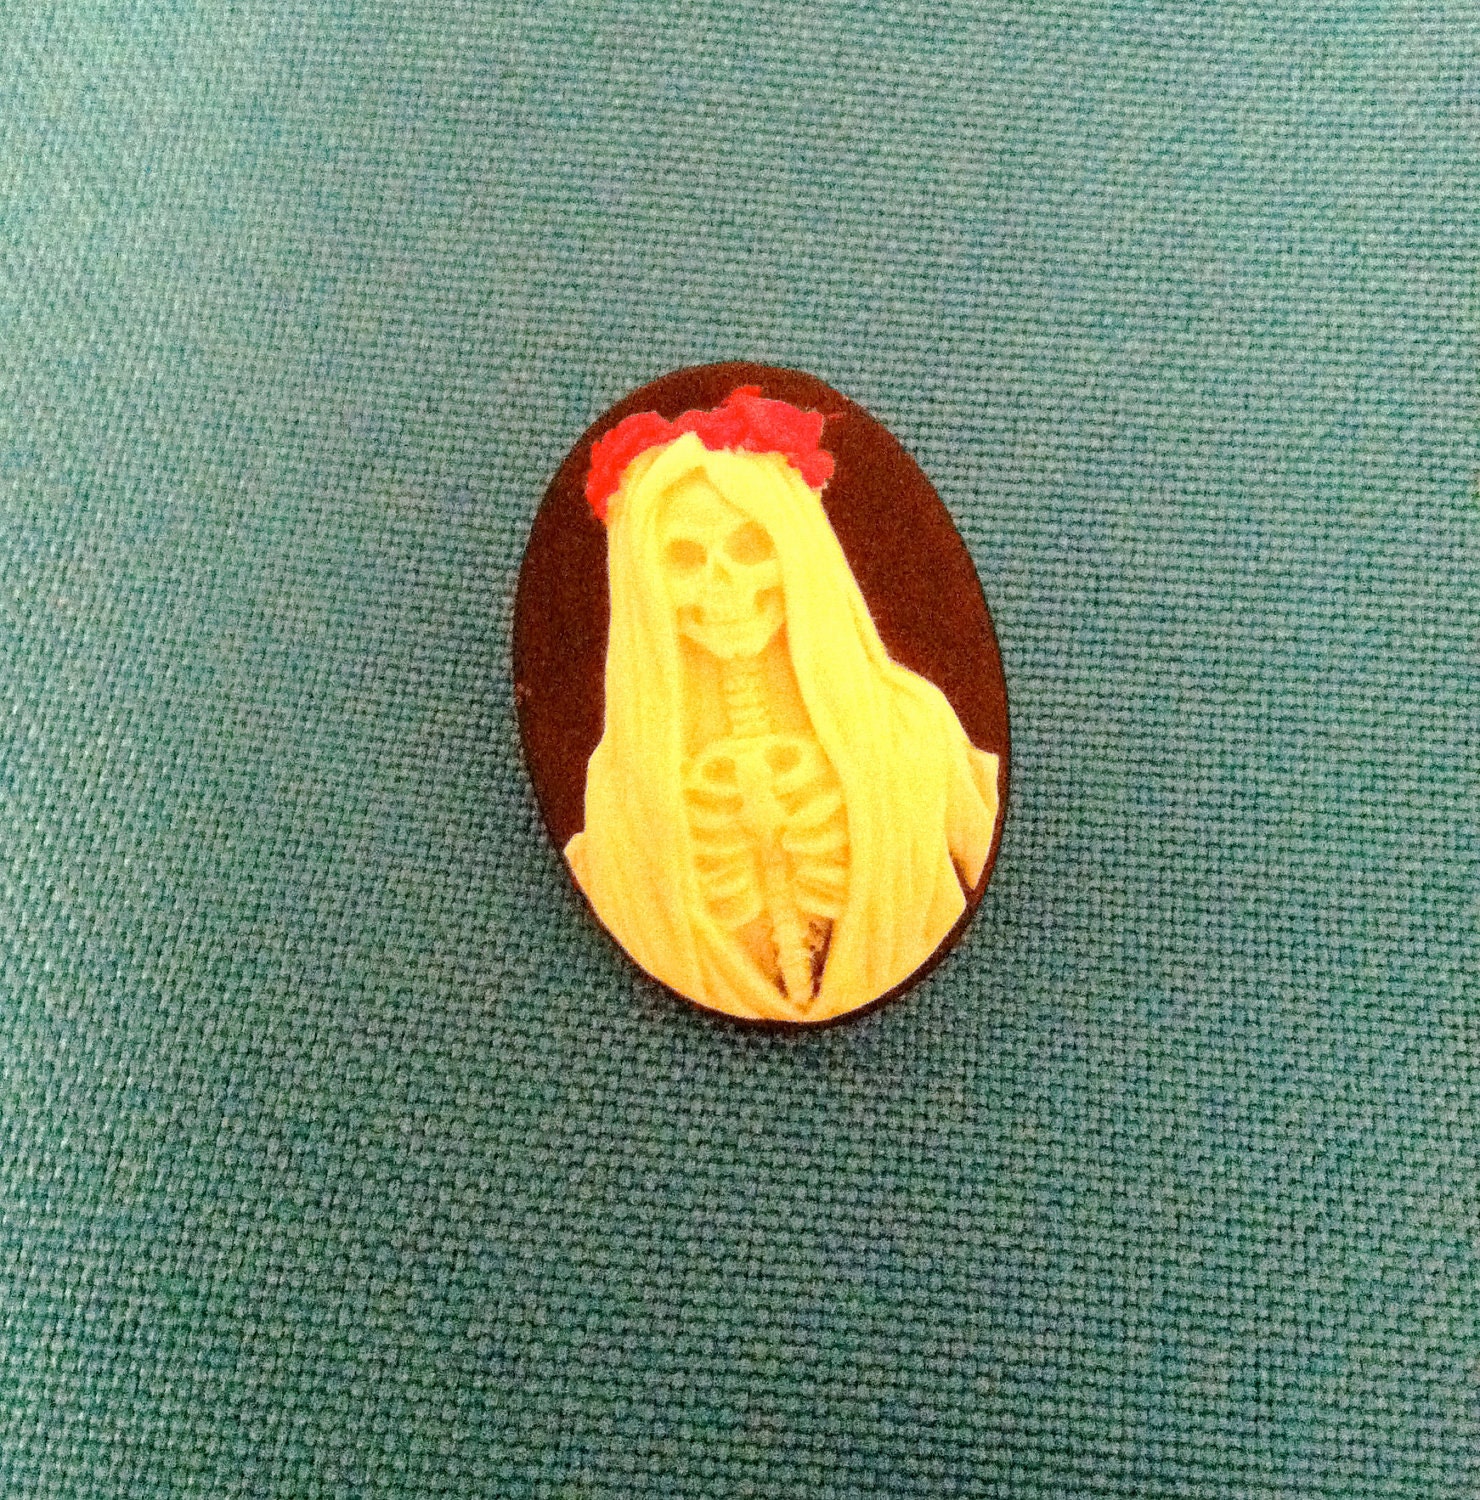 The bride cameo pin